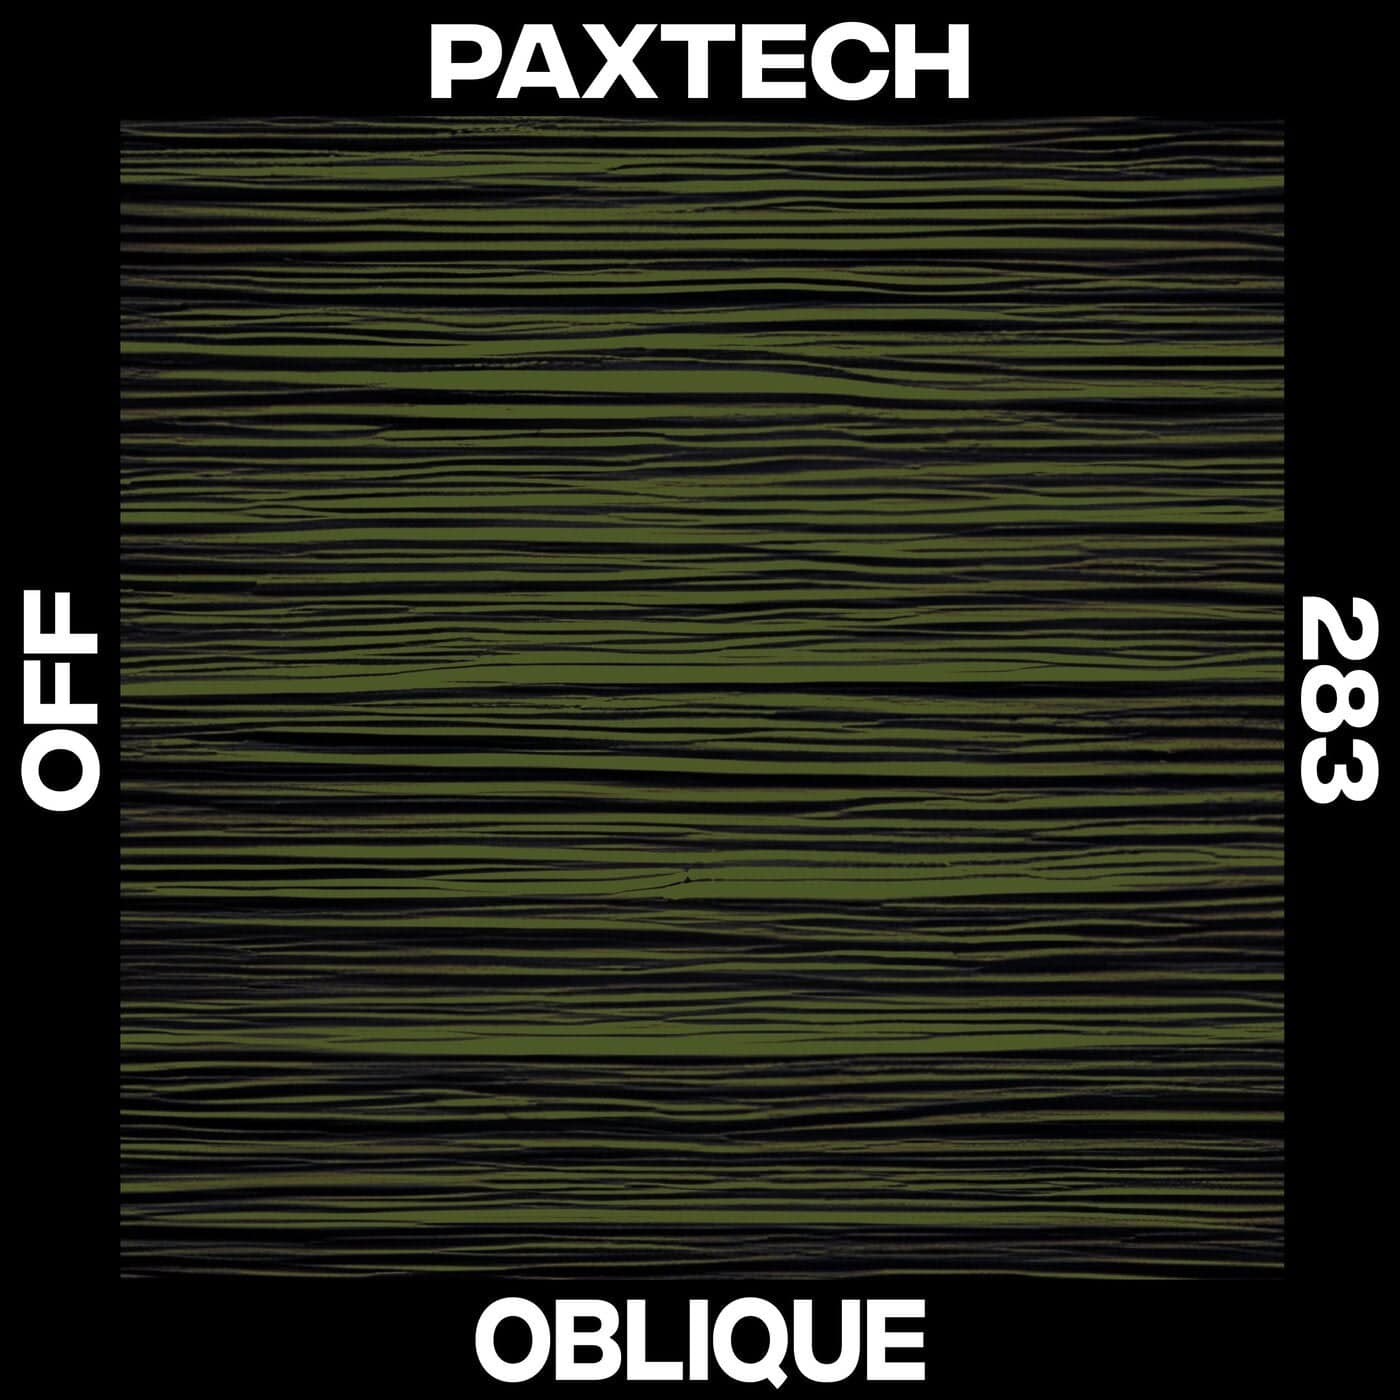 image cover: Paxtech - Oblique / OFF283